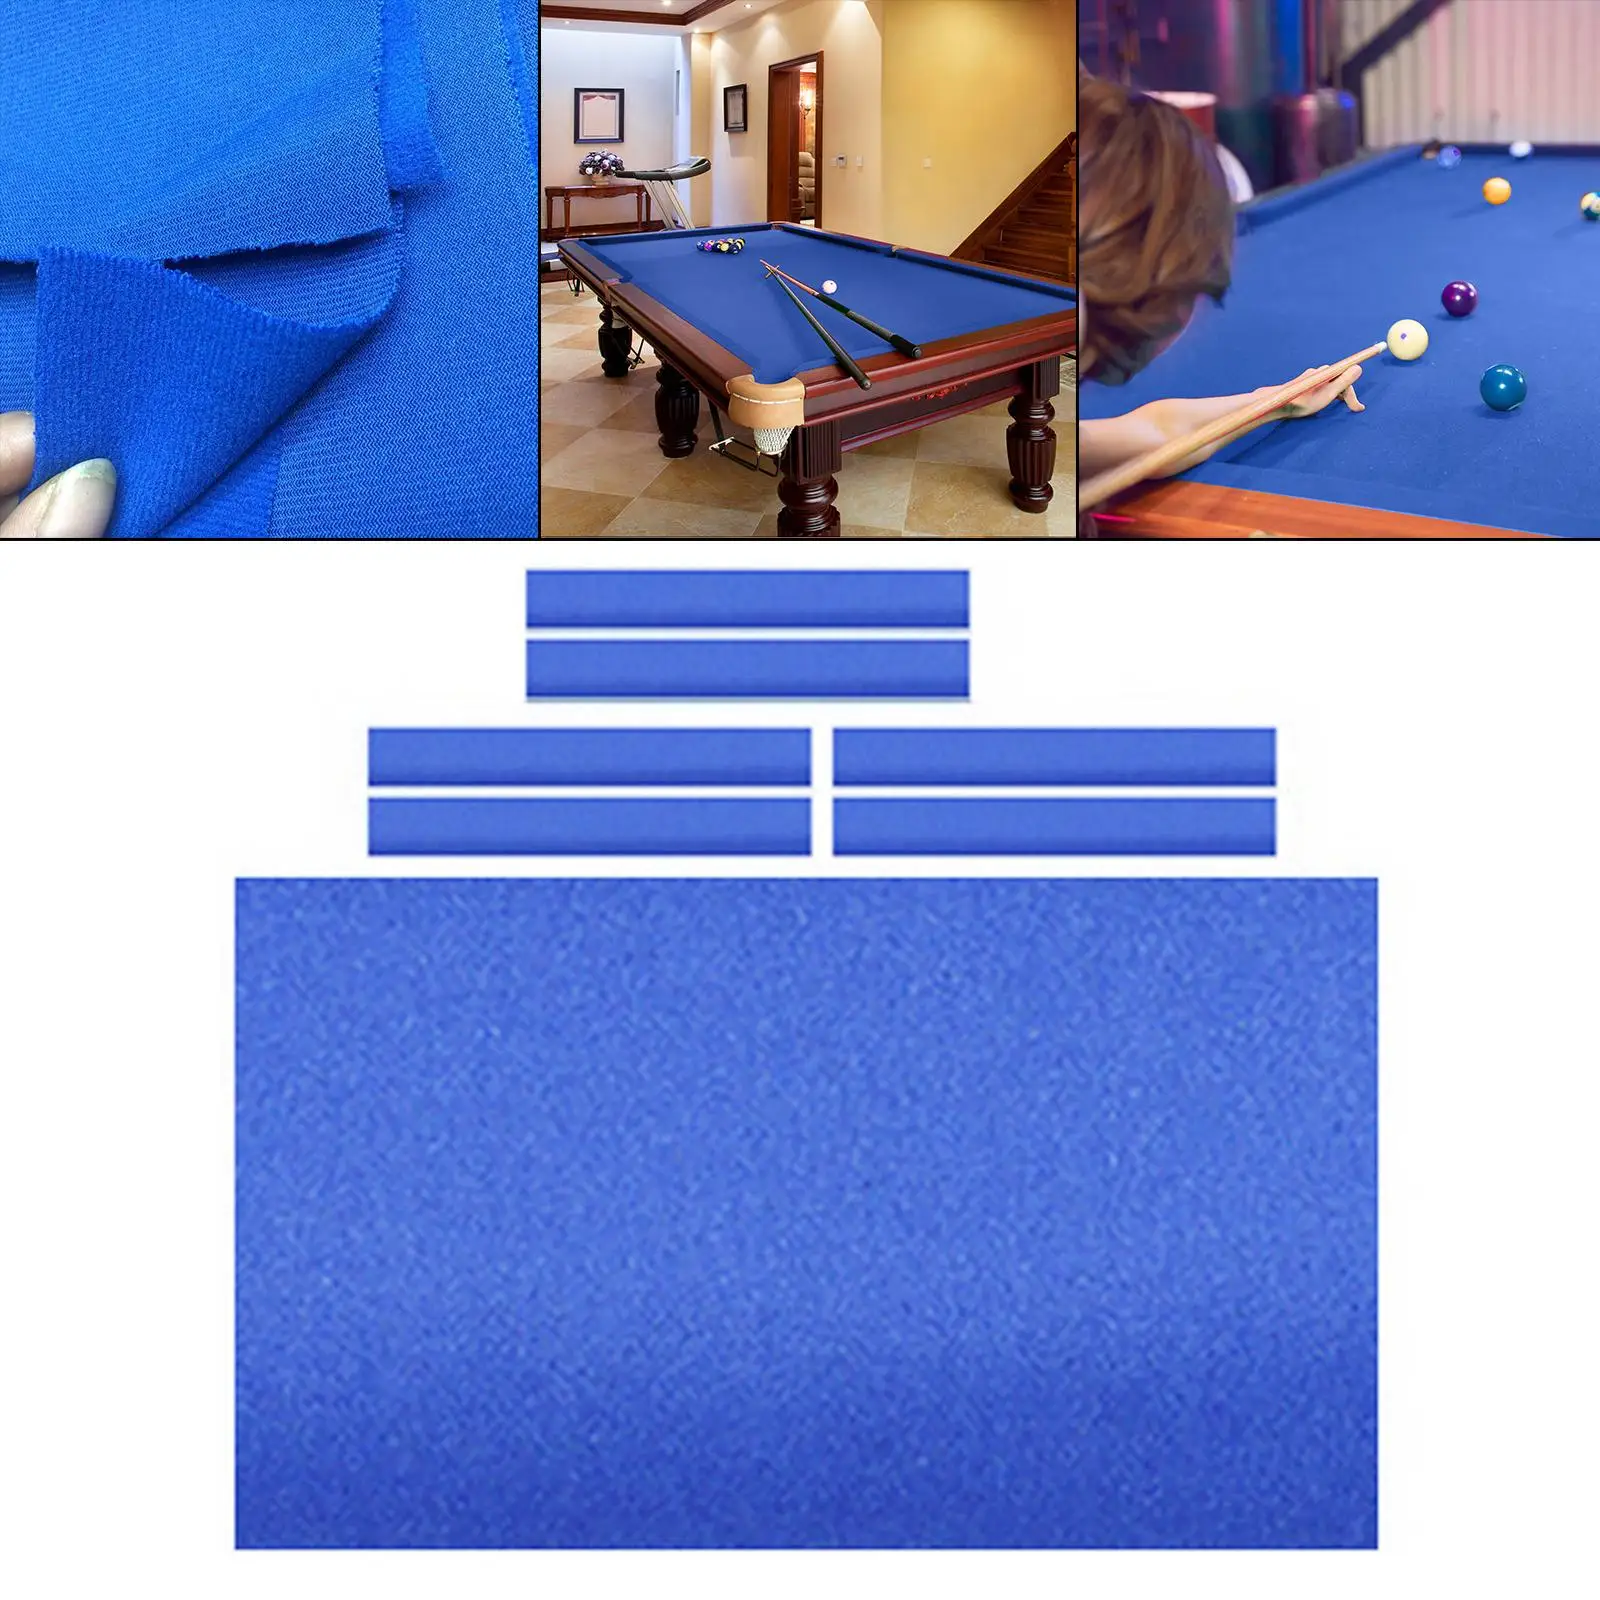 Billiards Pool Tablecloth Professional with Cushion Strips Billiard Cloth